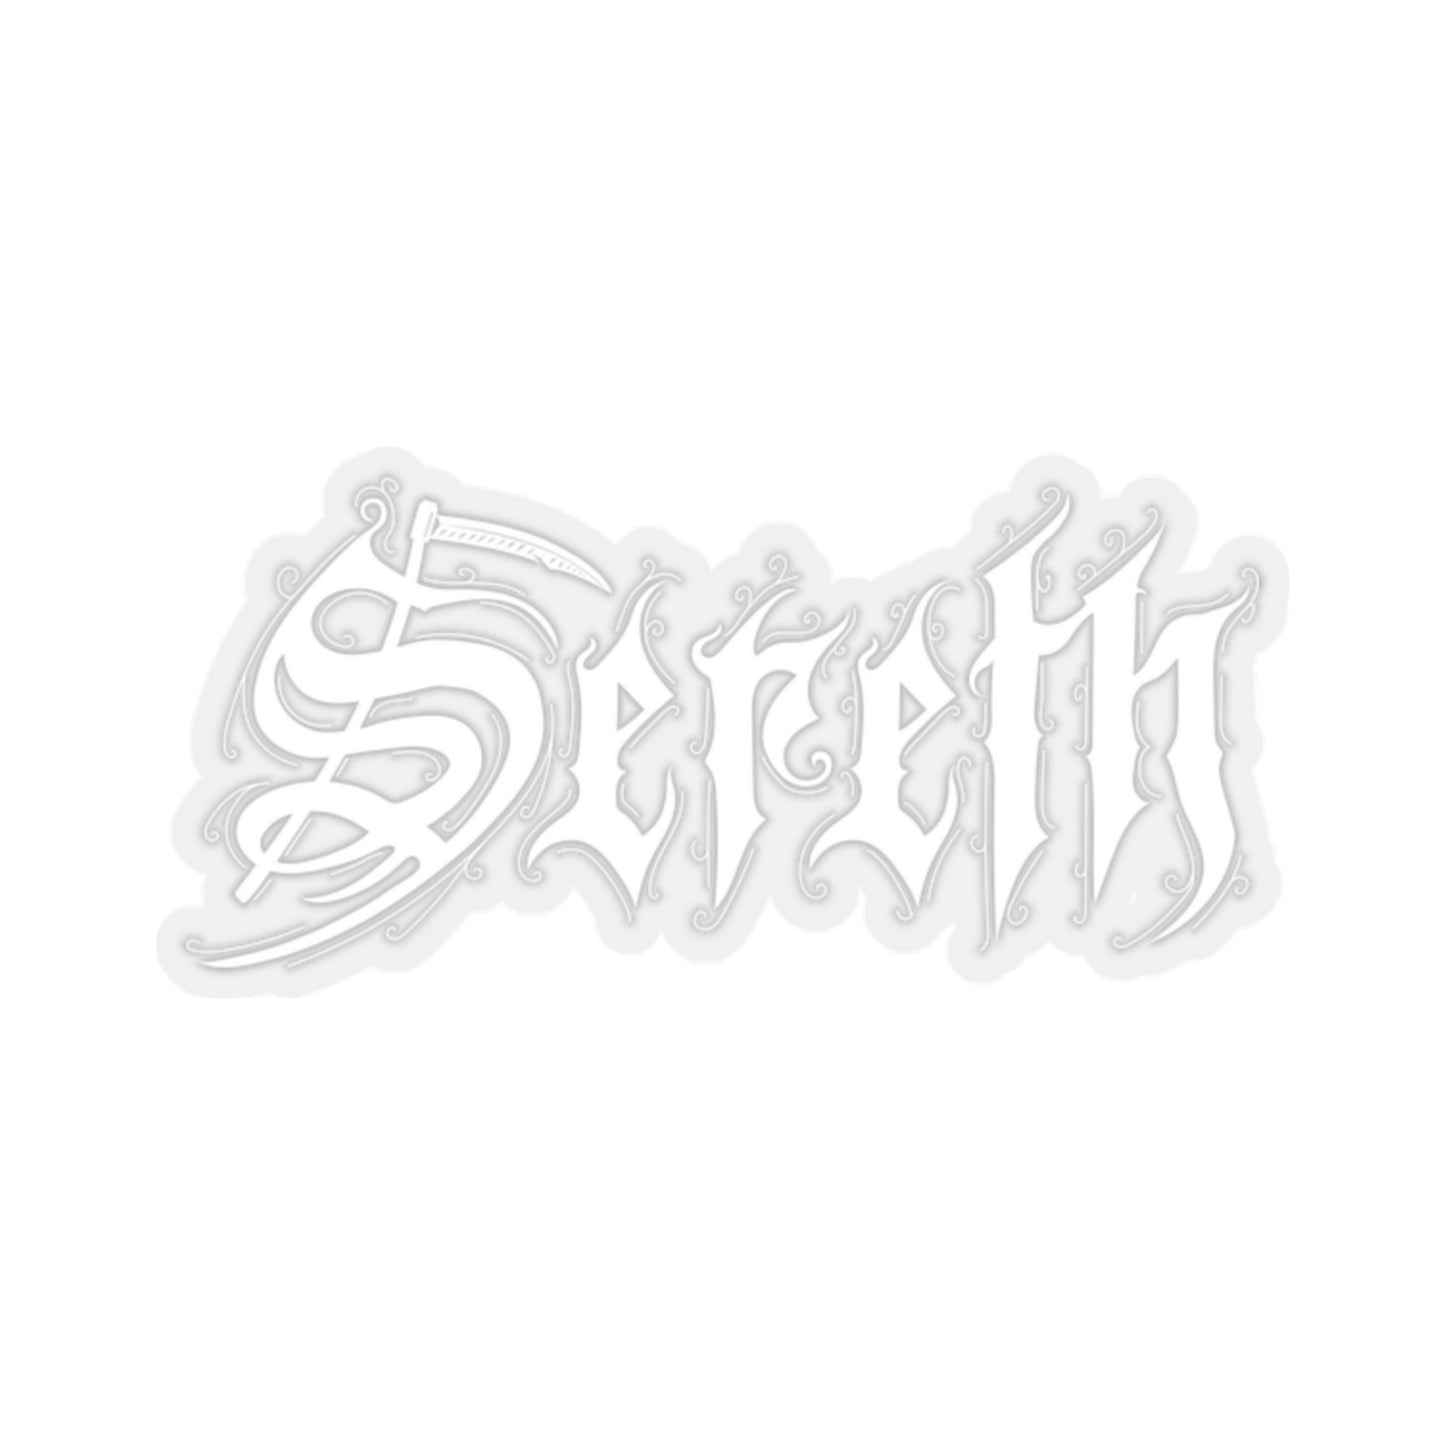 Sereth Logo - Stickers (Europe)